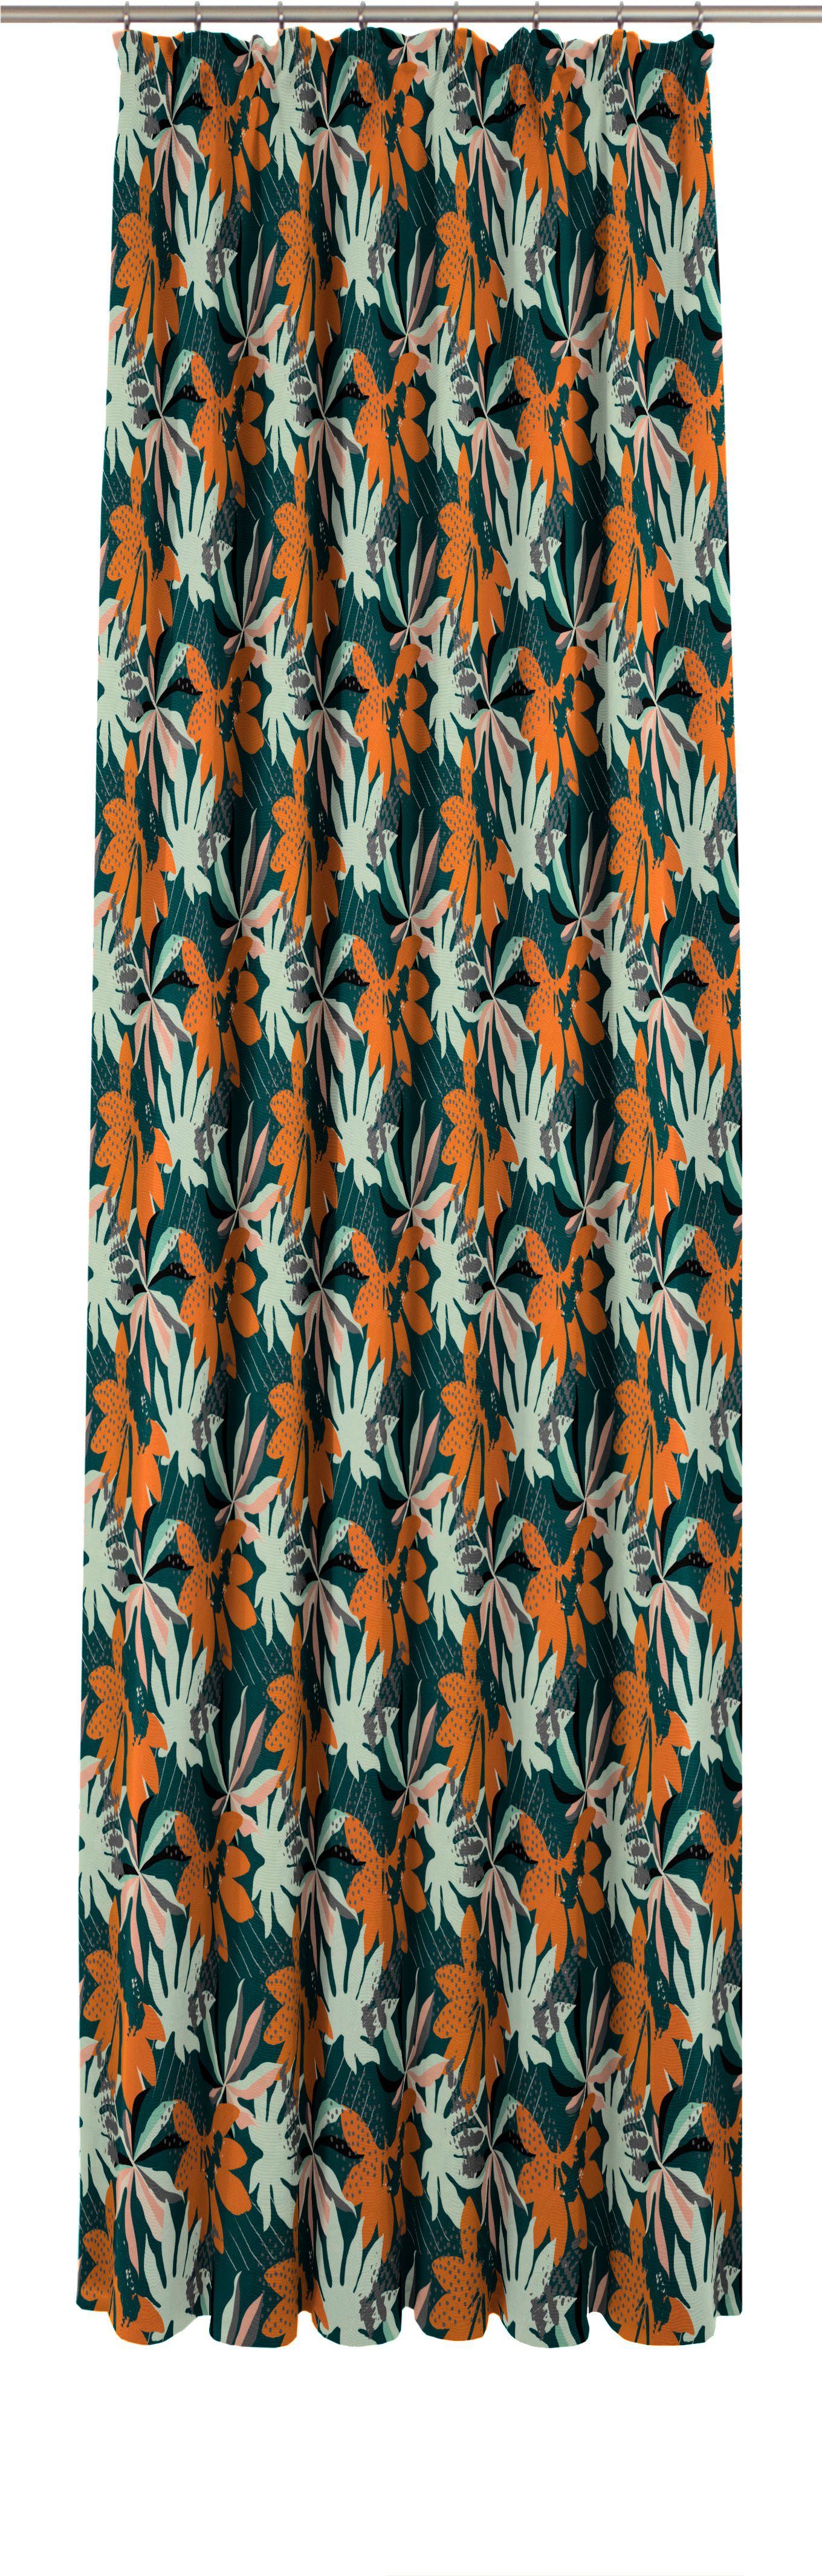 Jungle, St), nachhaltig Kräuselband Jacquard, Adam, blickdicht, Vorhang (1 orange/dunkelgrün